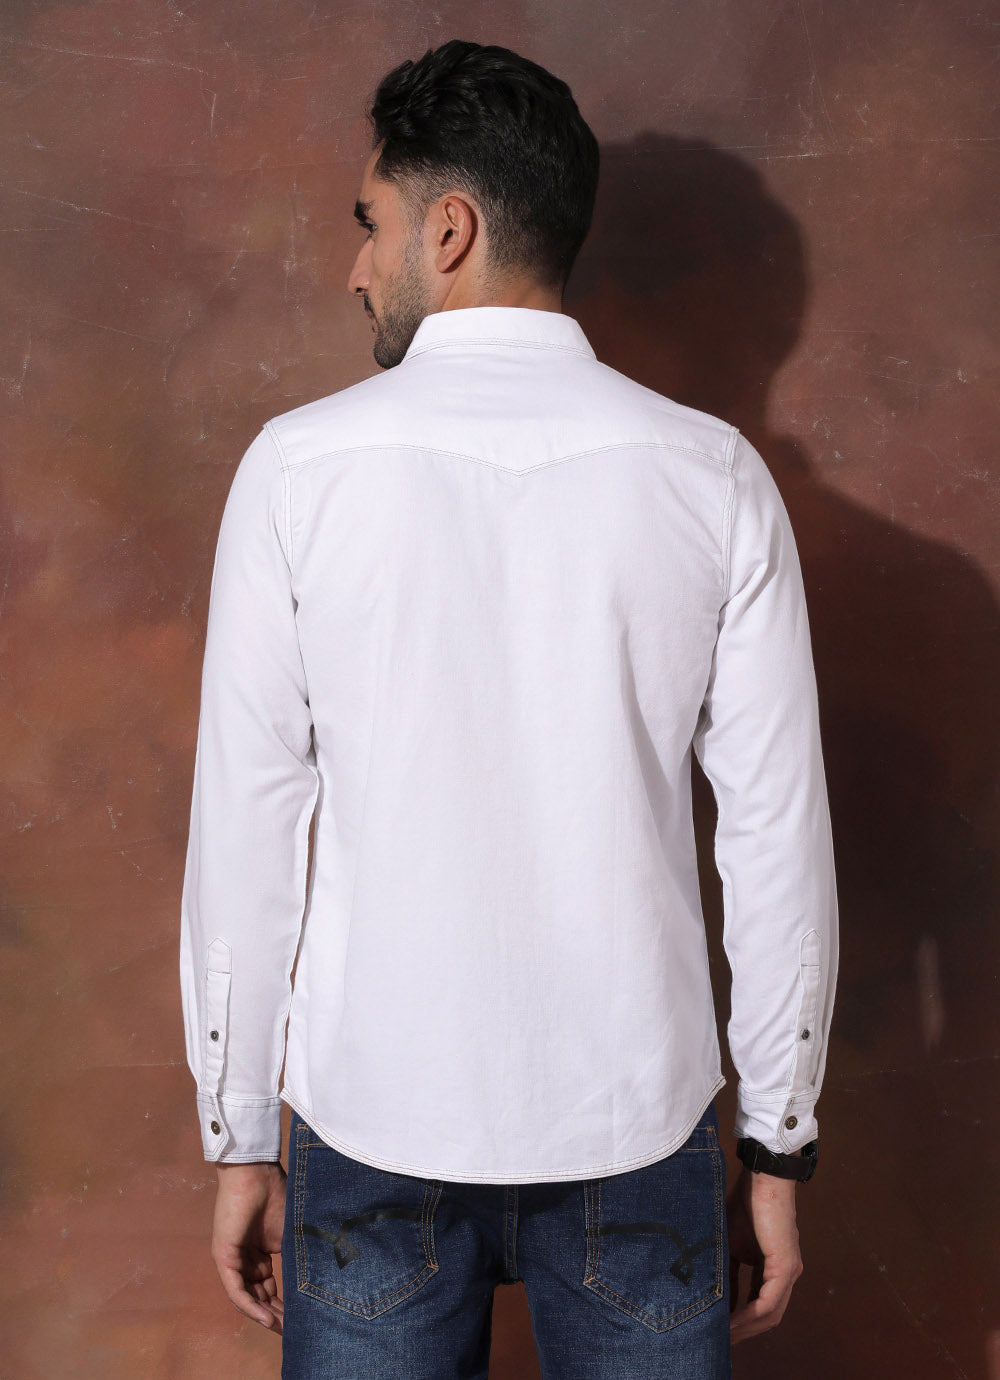 Statement White -  Slim Fit Denim Shirt Featuring Dual Pocket